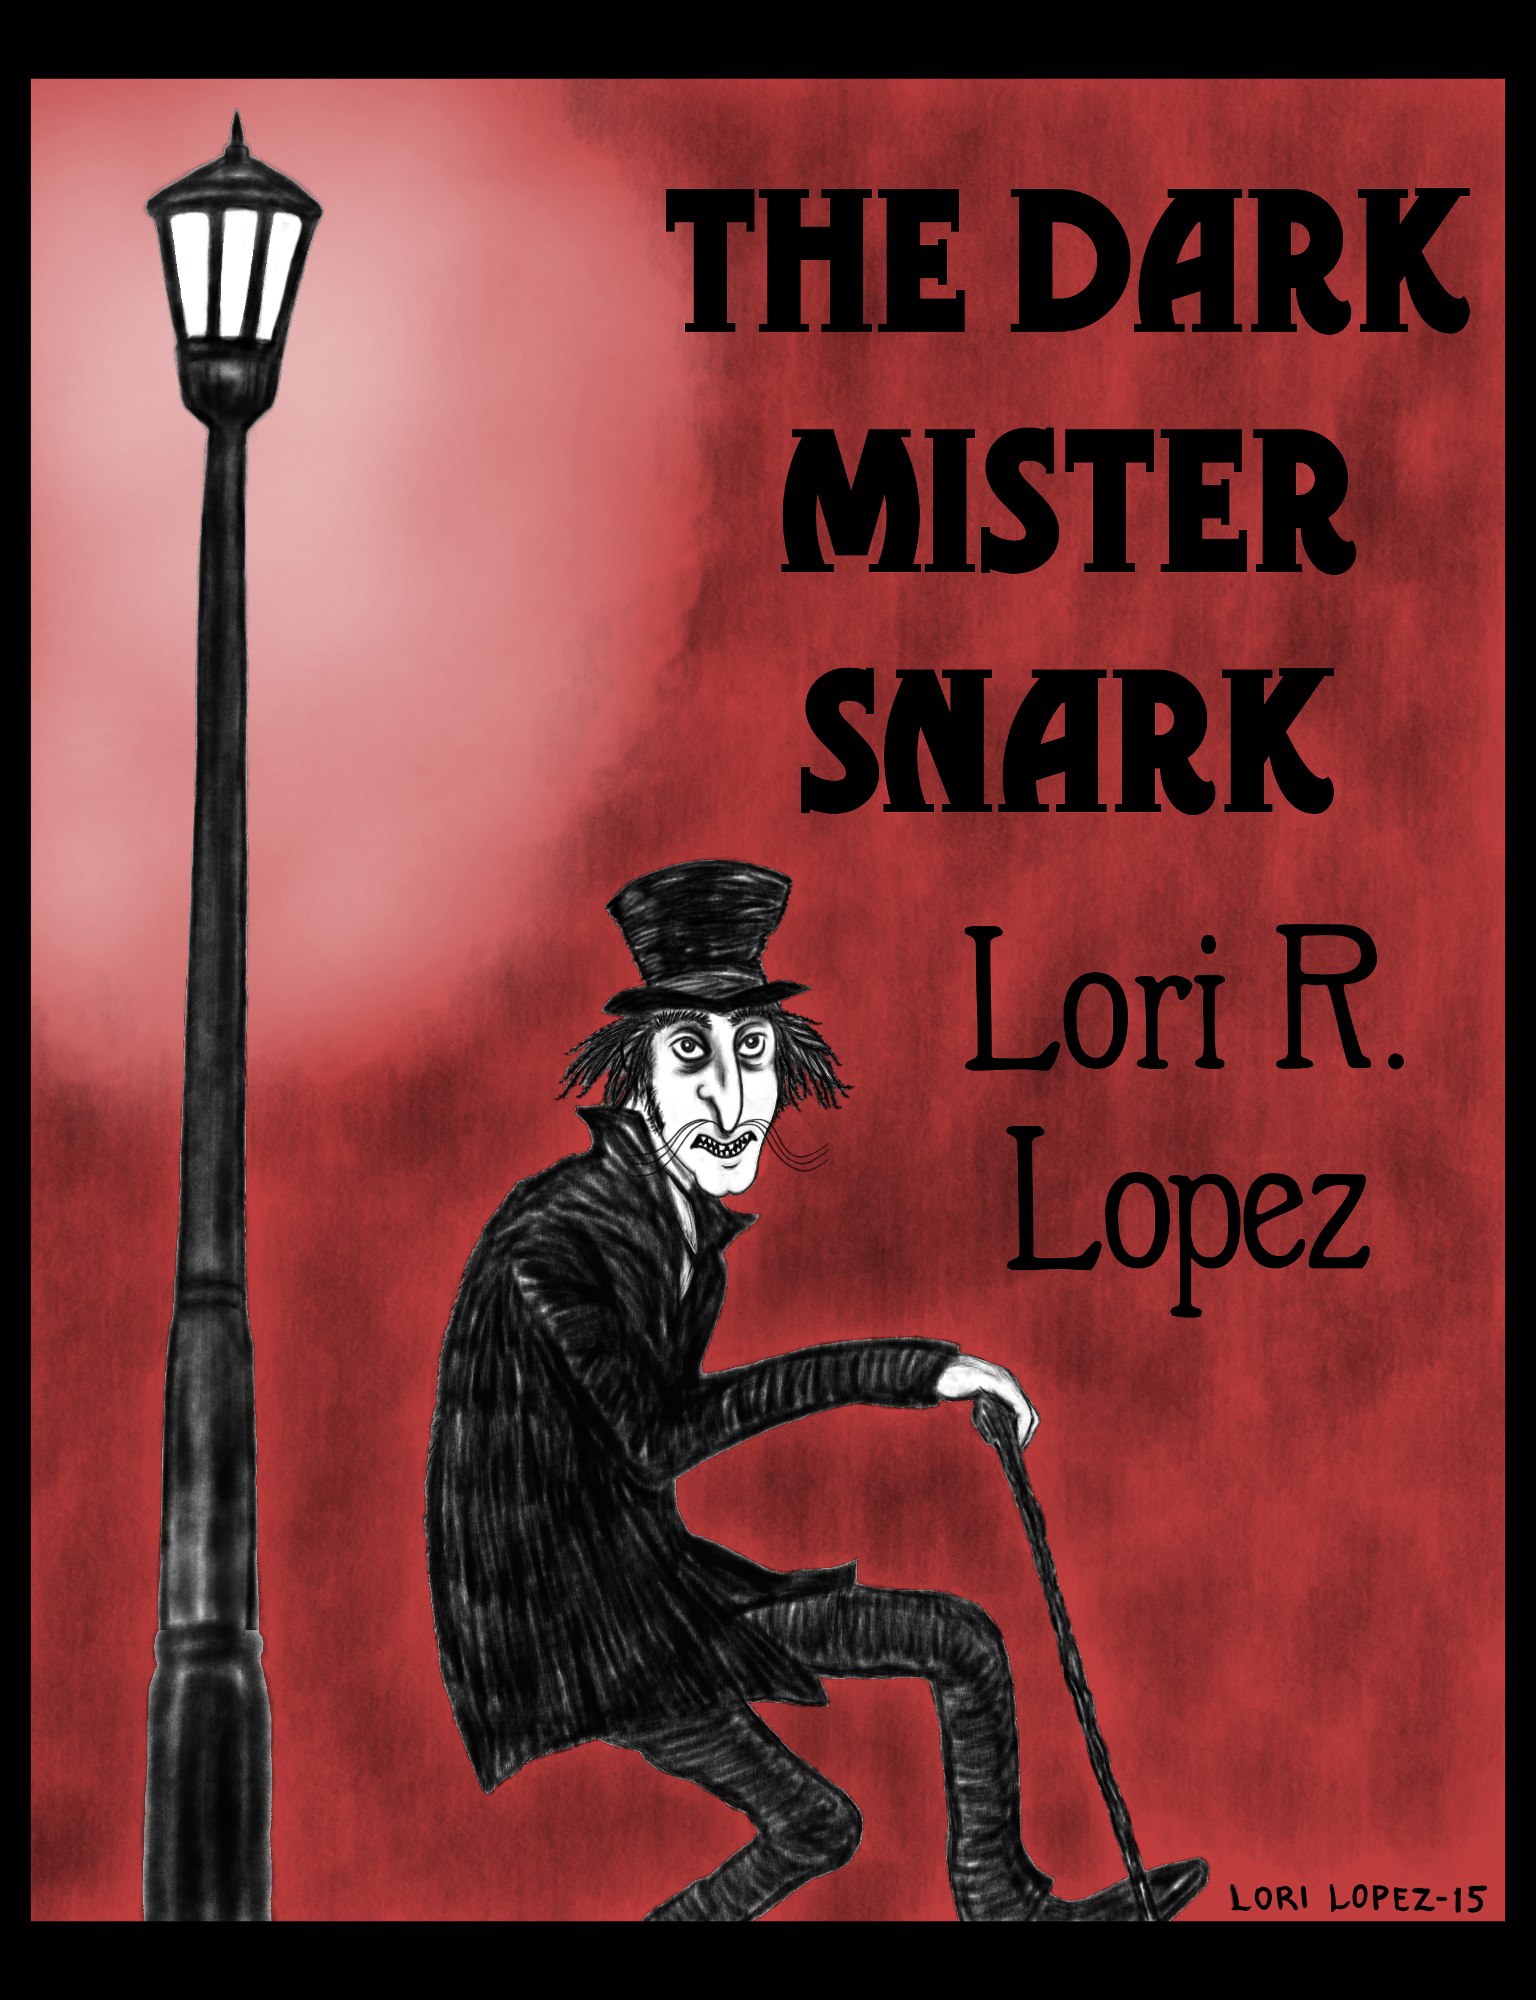 The Art of Lori R. Lopez 18